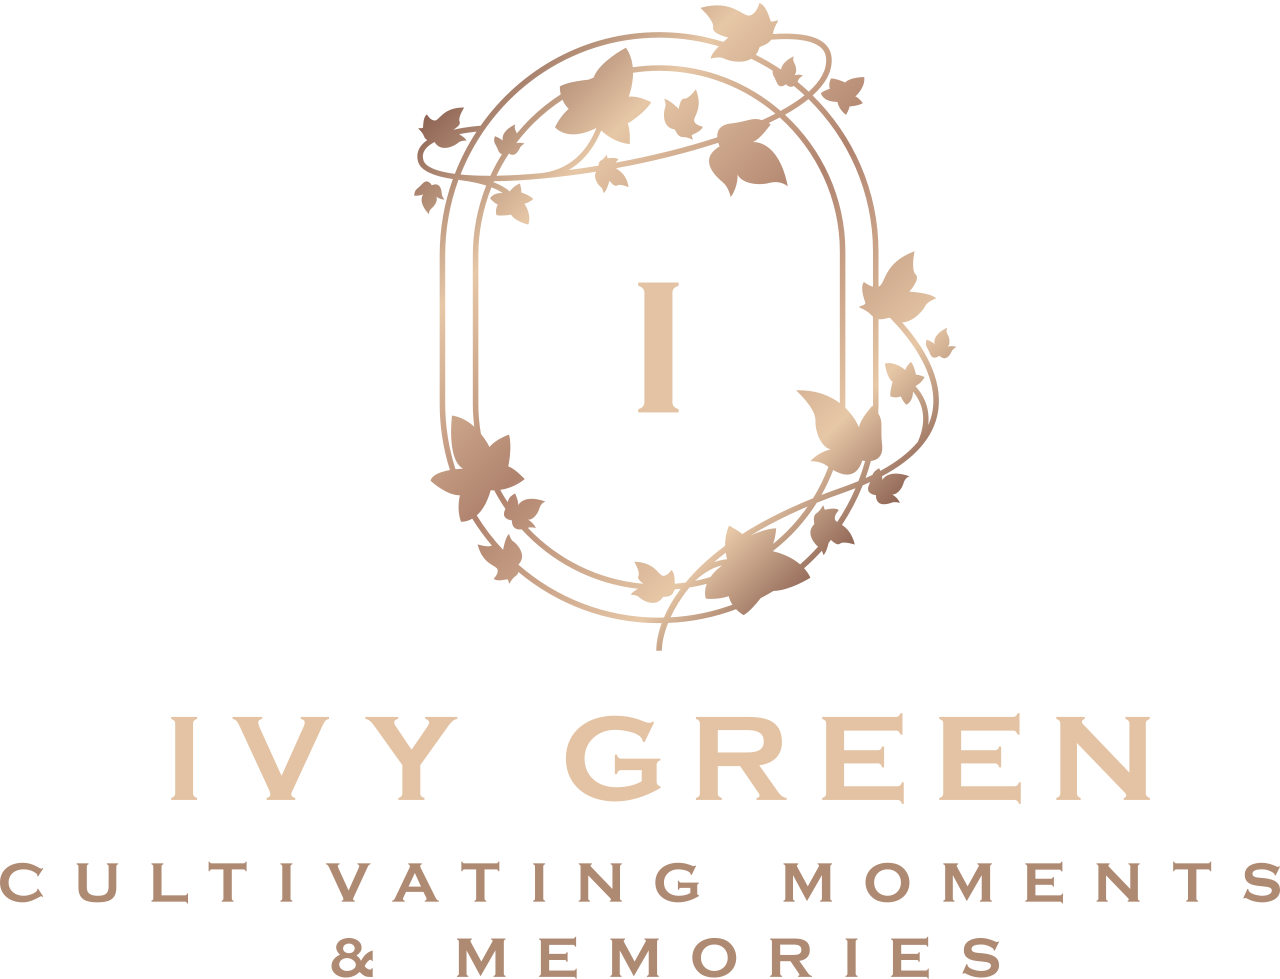 Ivy Green's logo